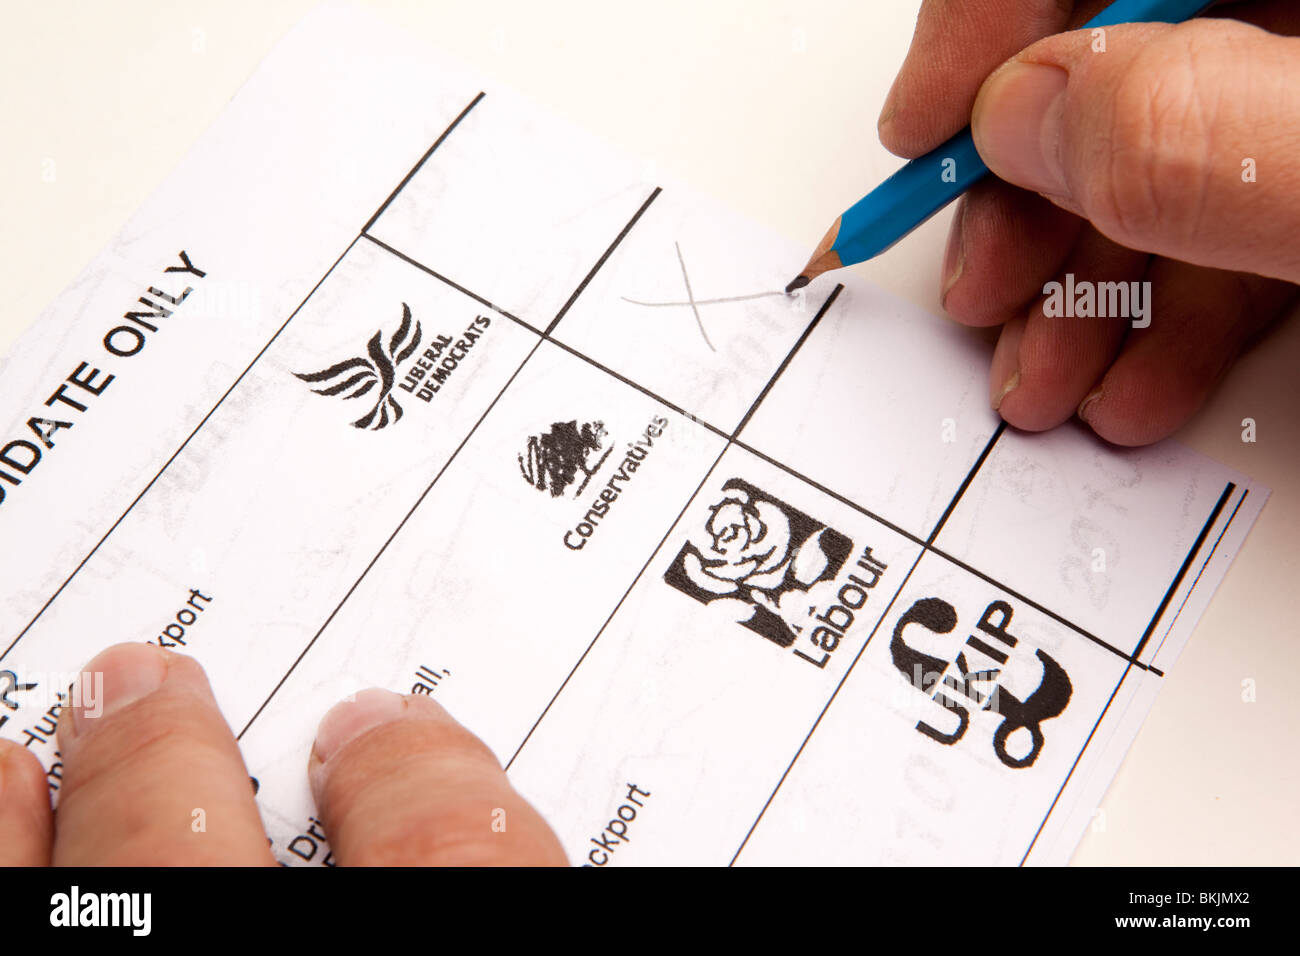 uk-elections-man-voting-on-ballot-paper-for-conservative-candidate-BKJMX2.jpg